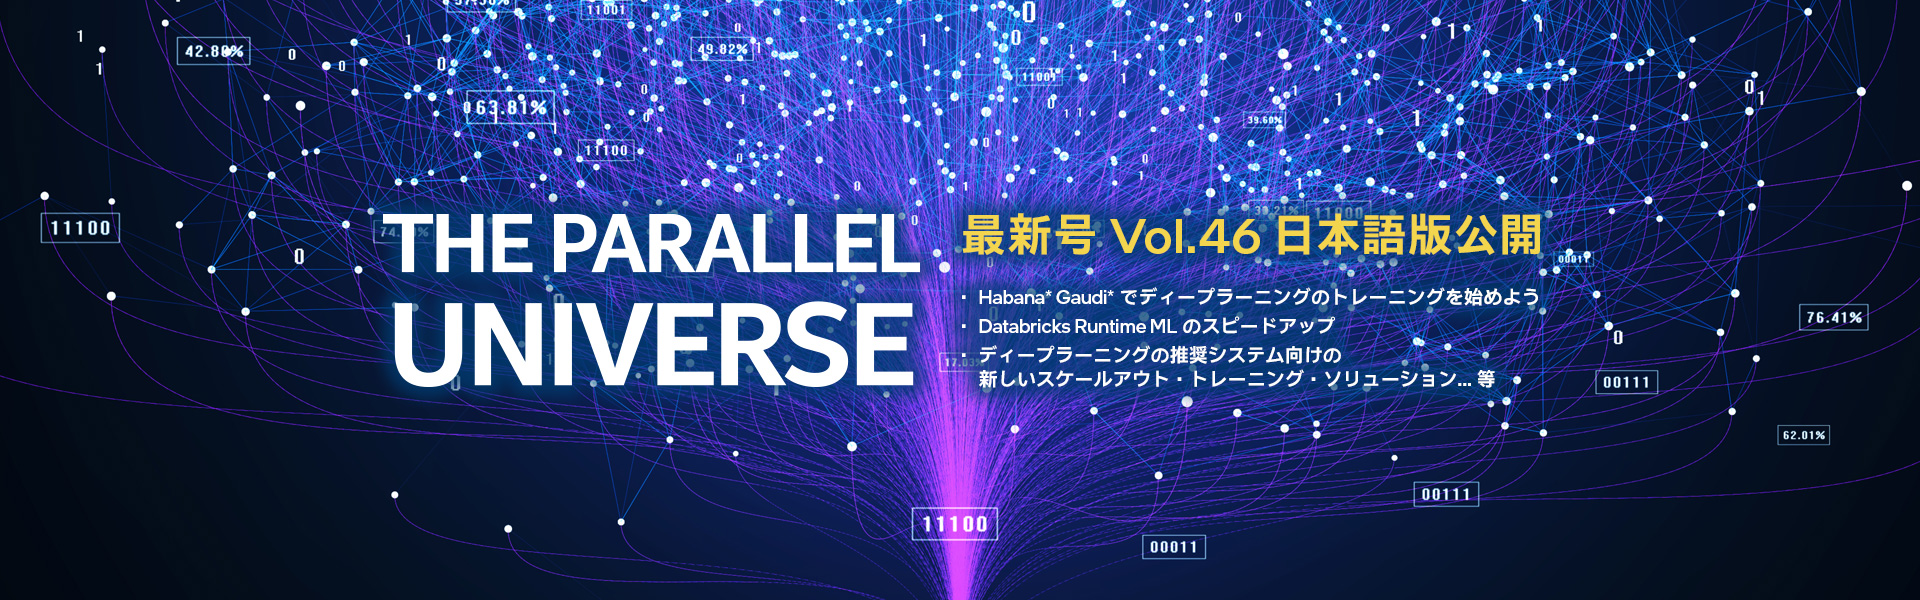 The Parallel Universe 最新号 Vol.46 日本語版公開中